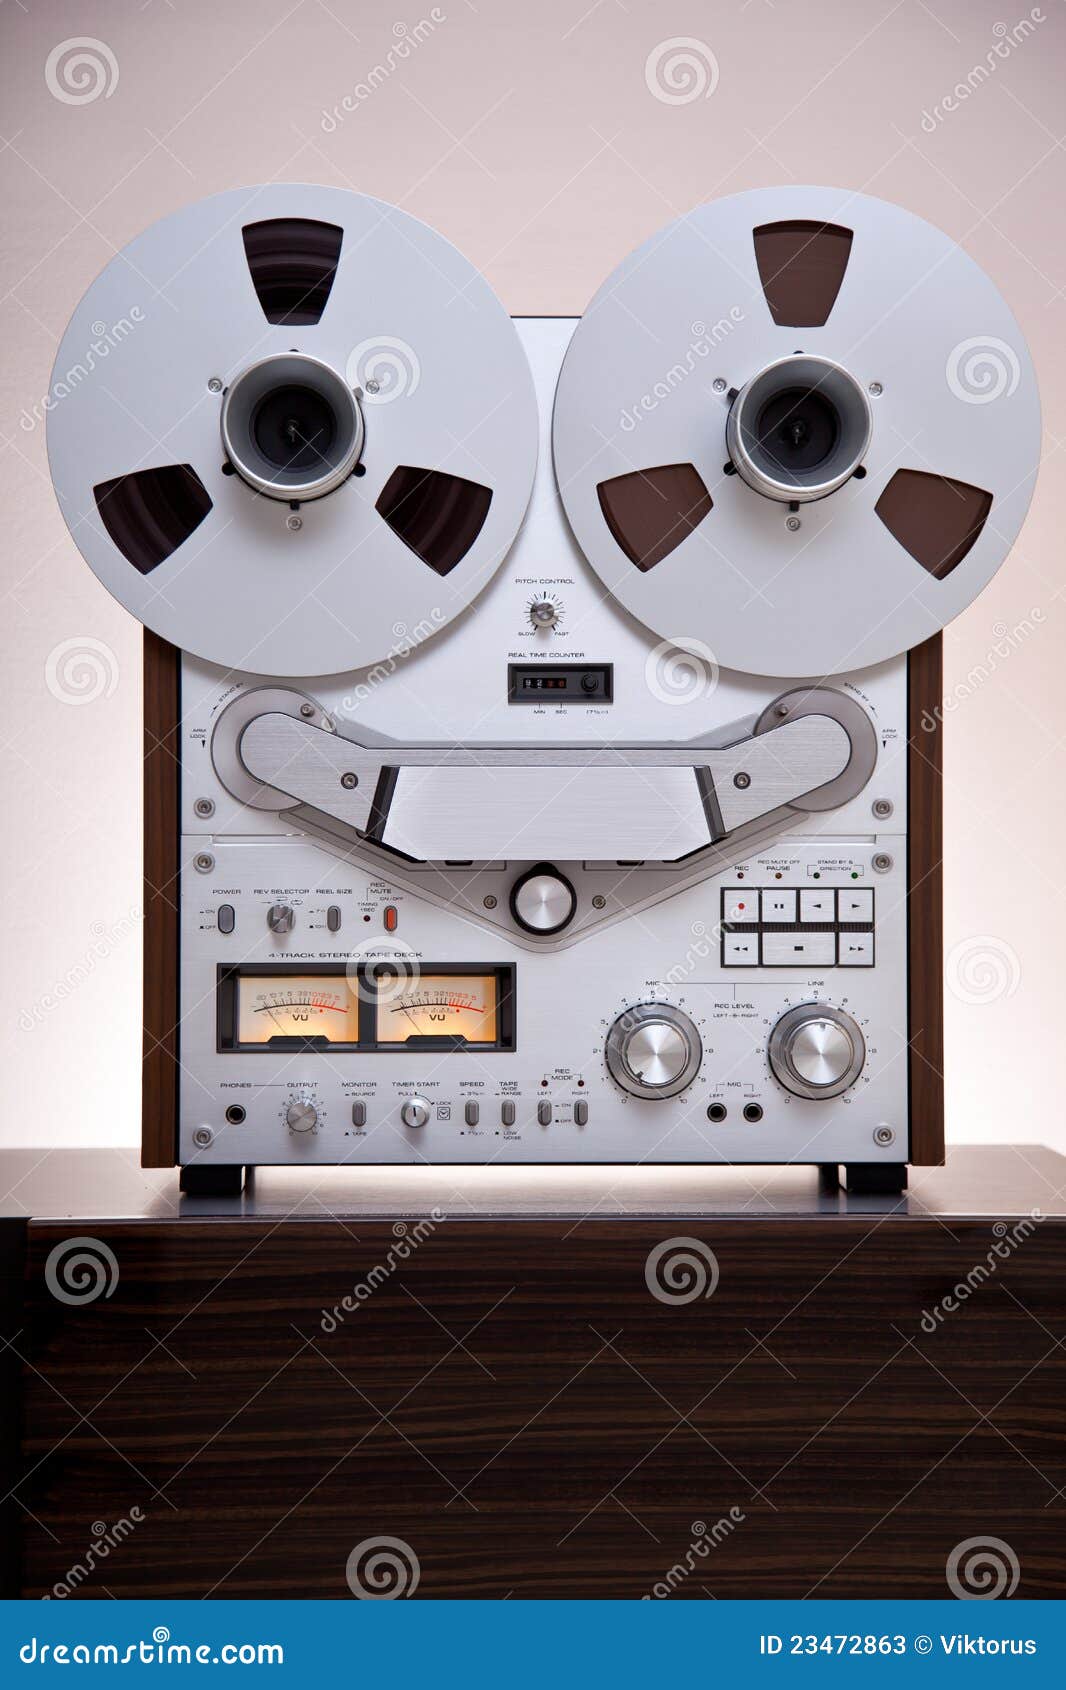 https://thumbs.dreamstime.com/z/analog-stereo-open-reel-tape-deck-recorder-23472863.jpg